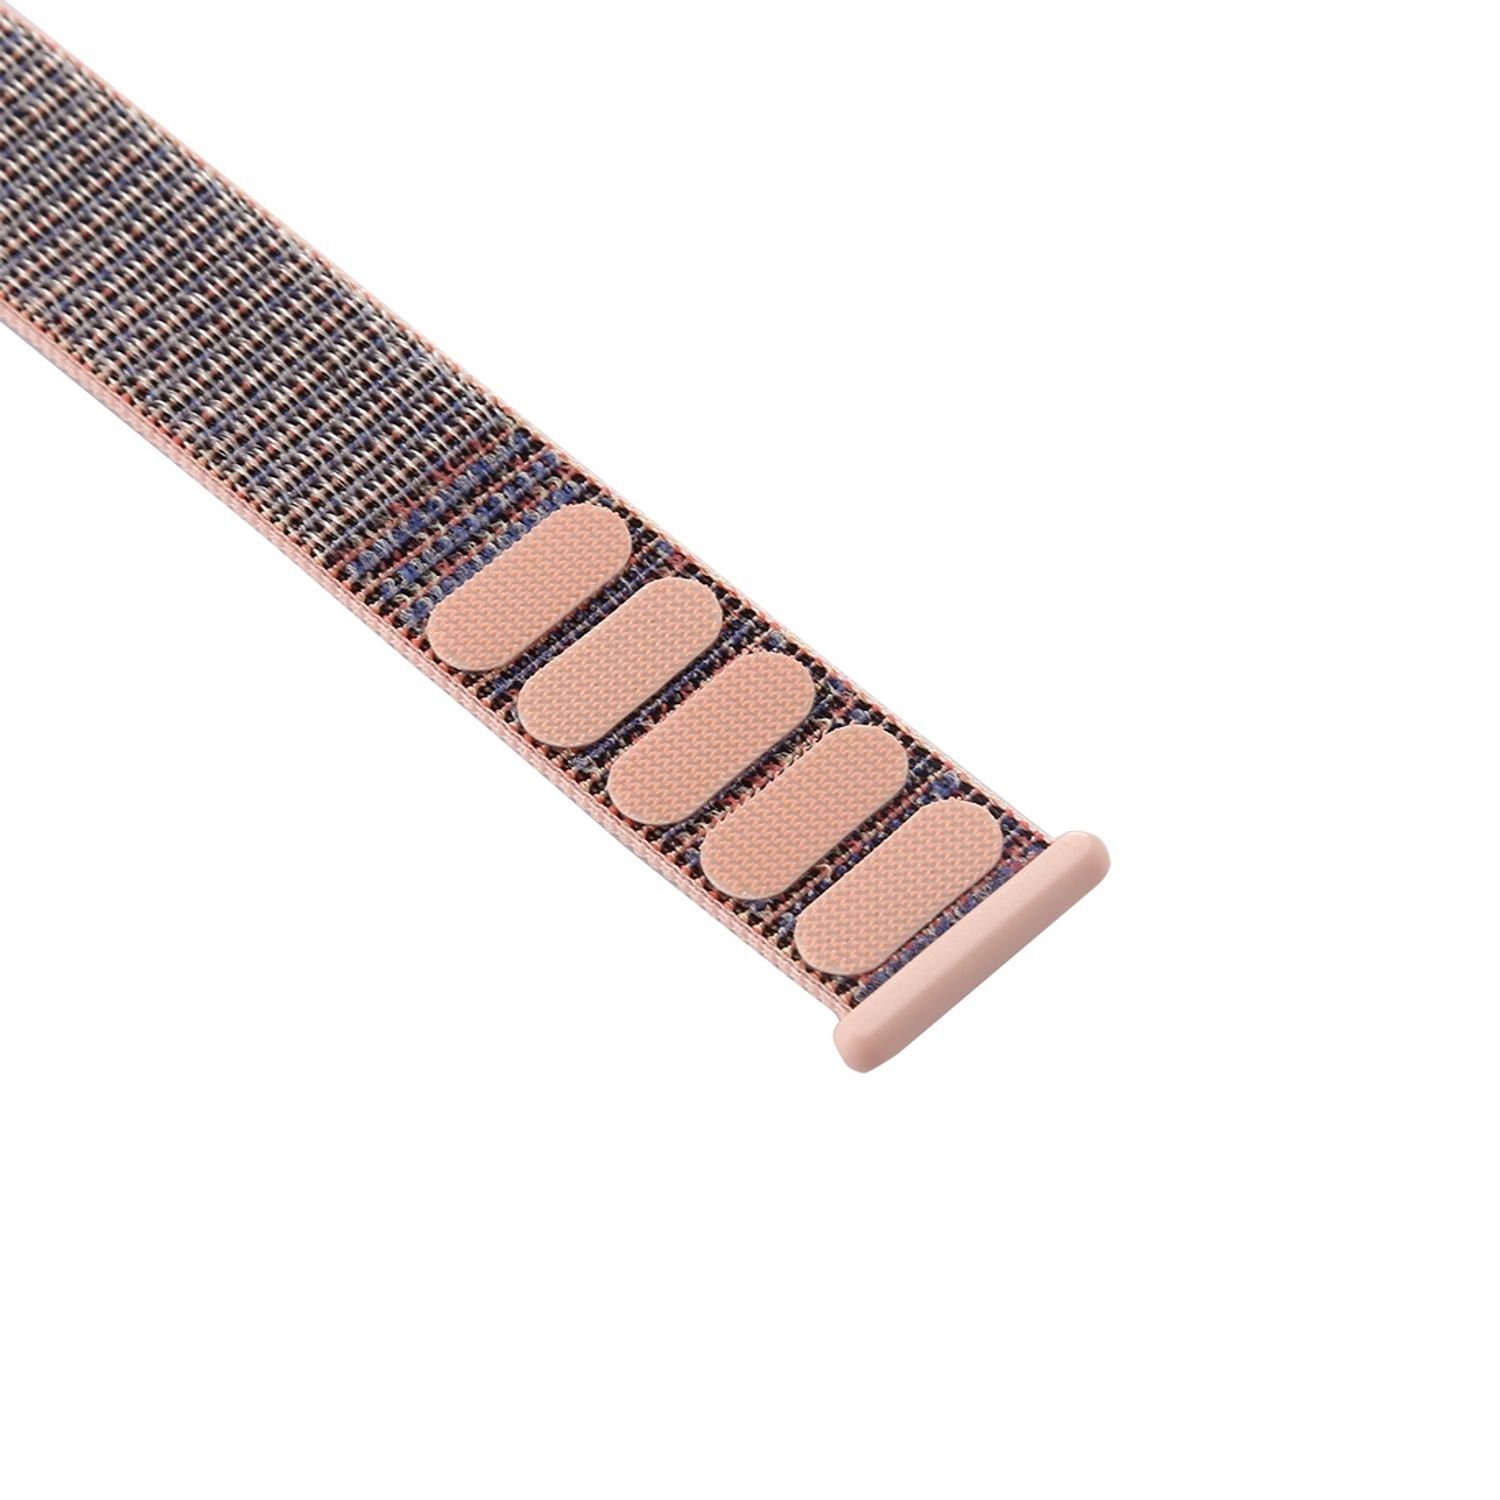 Smartwatch-Armband Nylon 44 / Arm Sport Armband König mm, 42 Design mm Rosa Loop 45 Band mm /